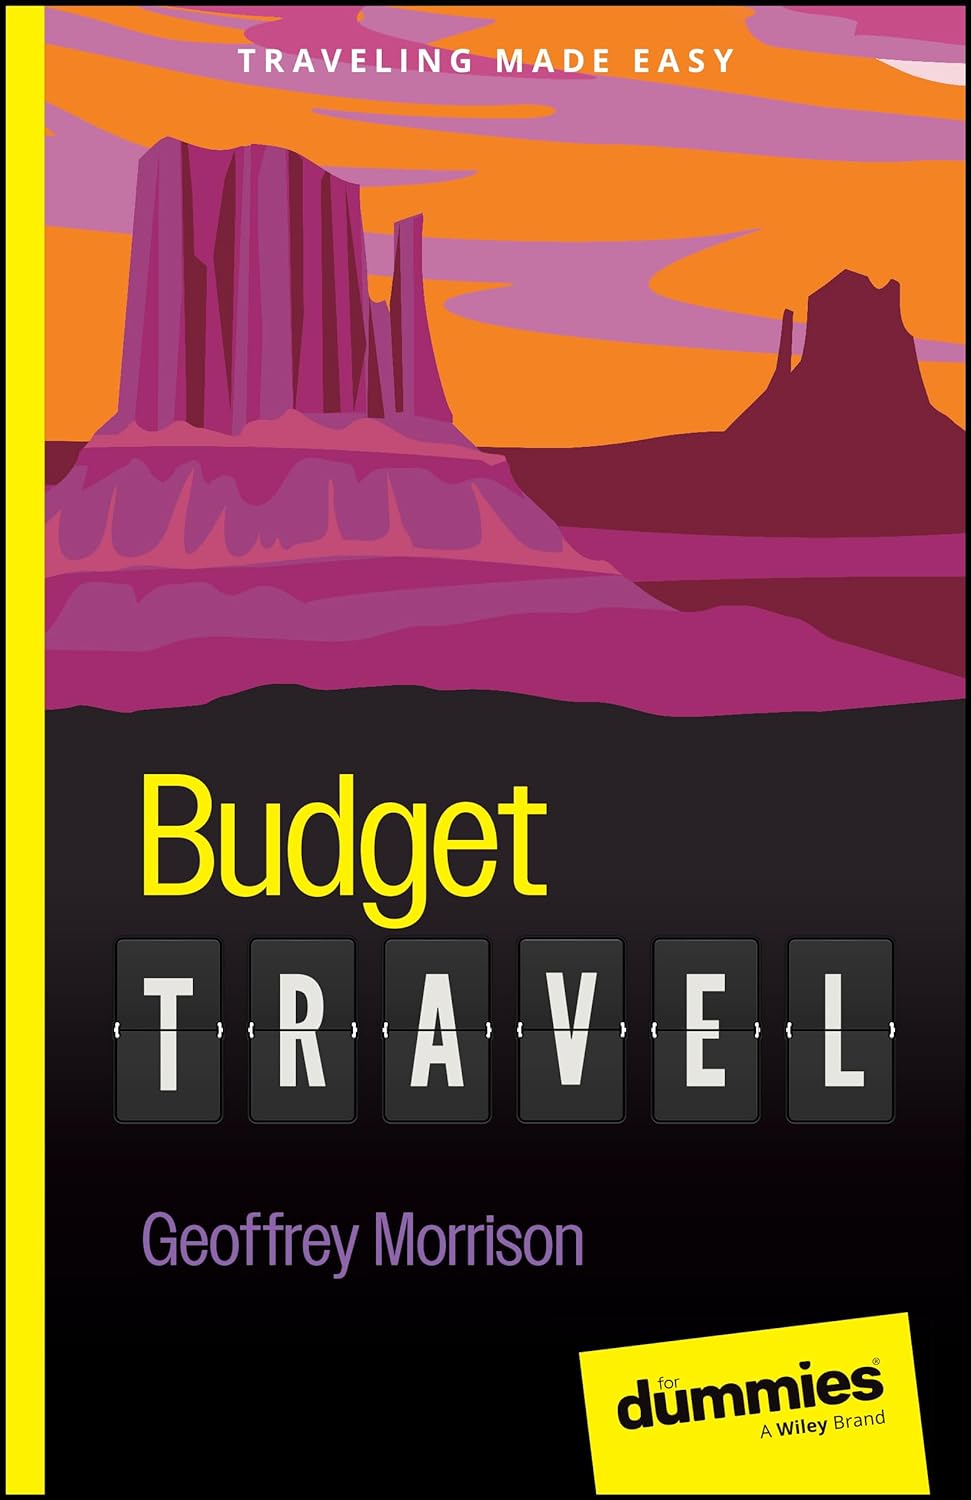 Budget Travel for Dummies (1st ed.) - SureShot Books Publishing LLC